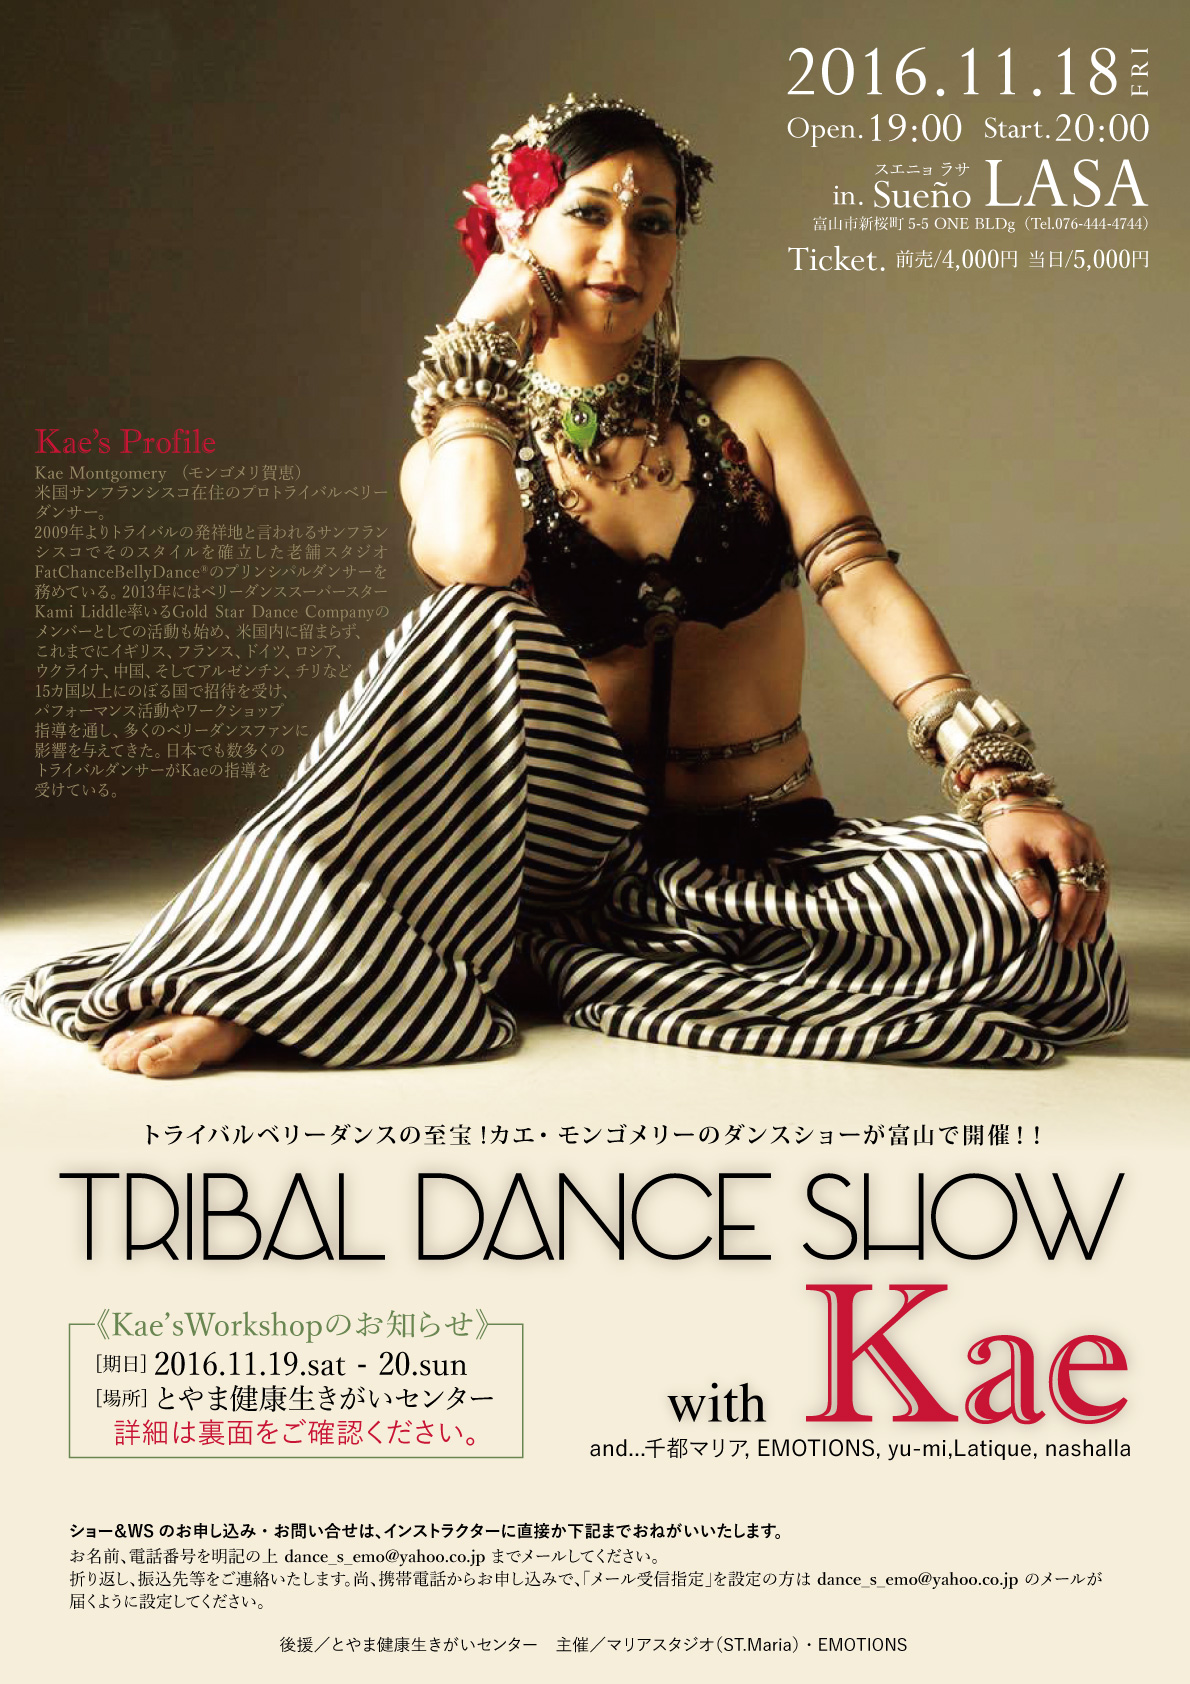 Kae Tribal Dance Show & Workshop 2016